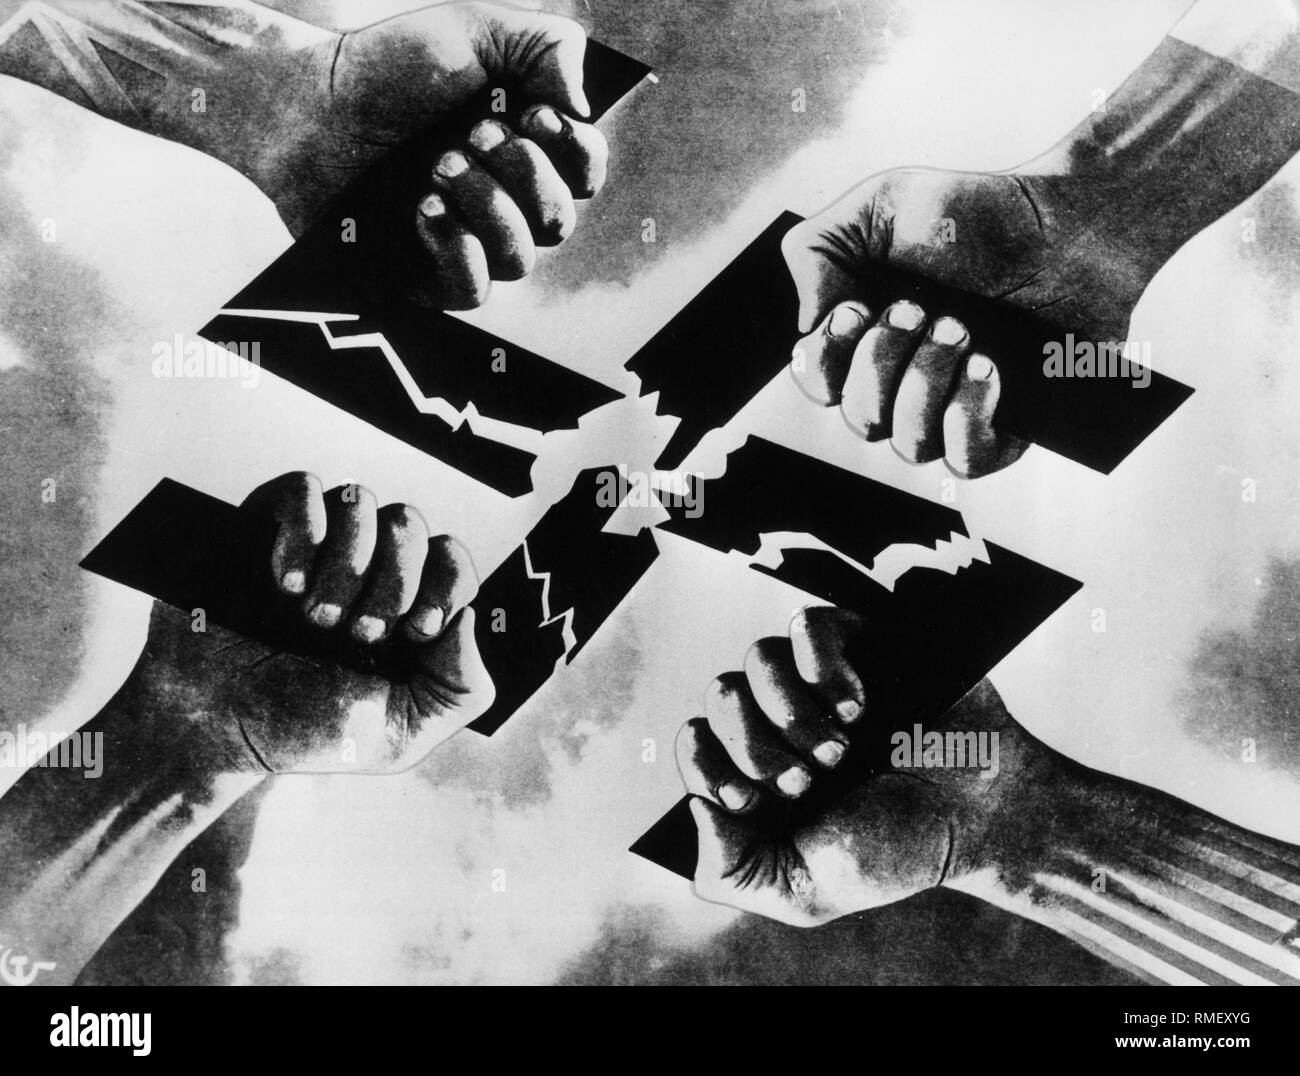 Four hands symbolizing the Allies (US, UK, France, Soviet Union) tear a swastika. Stock Photo